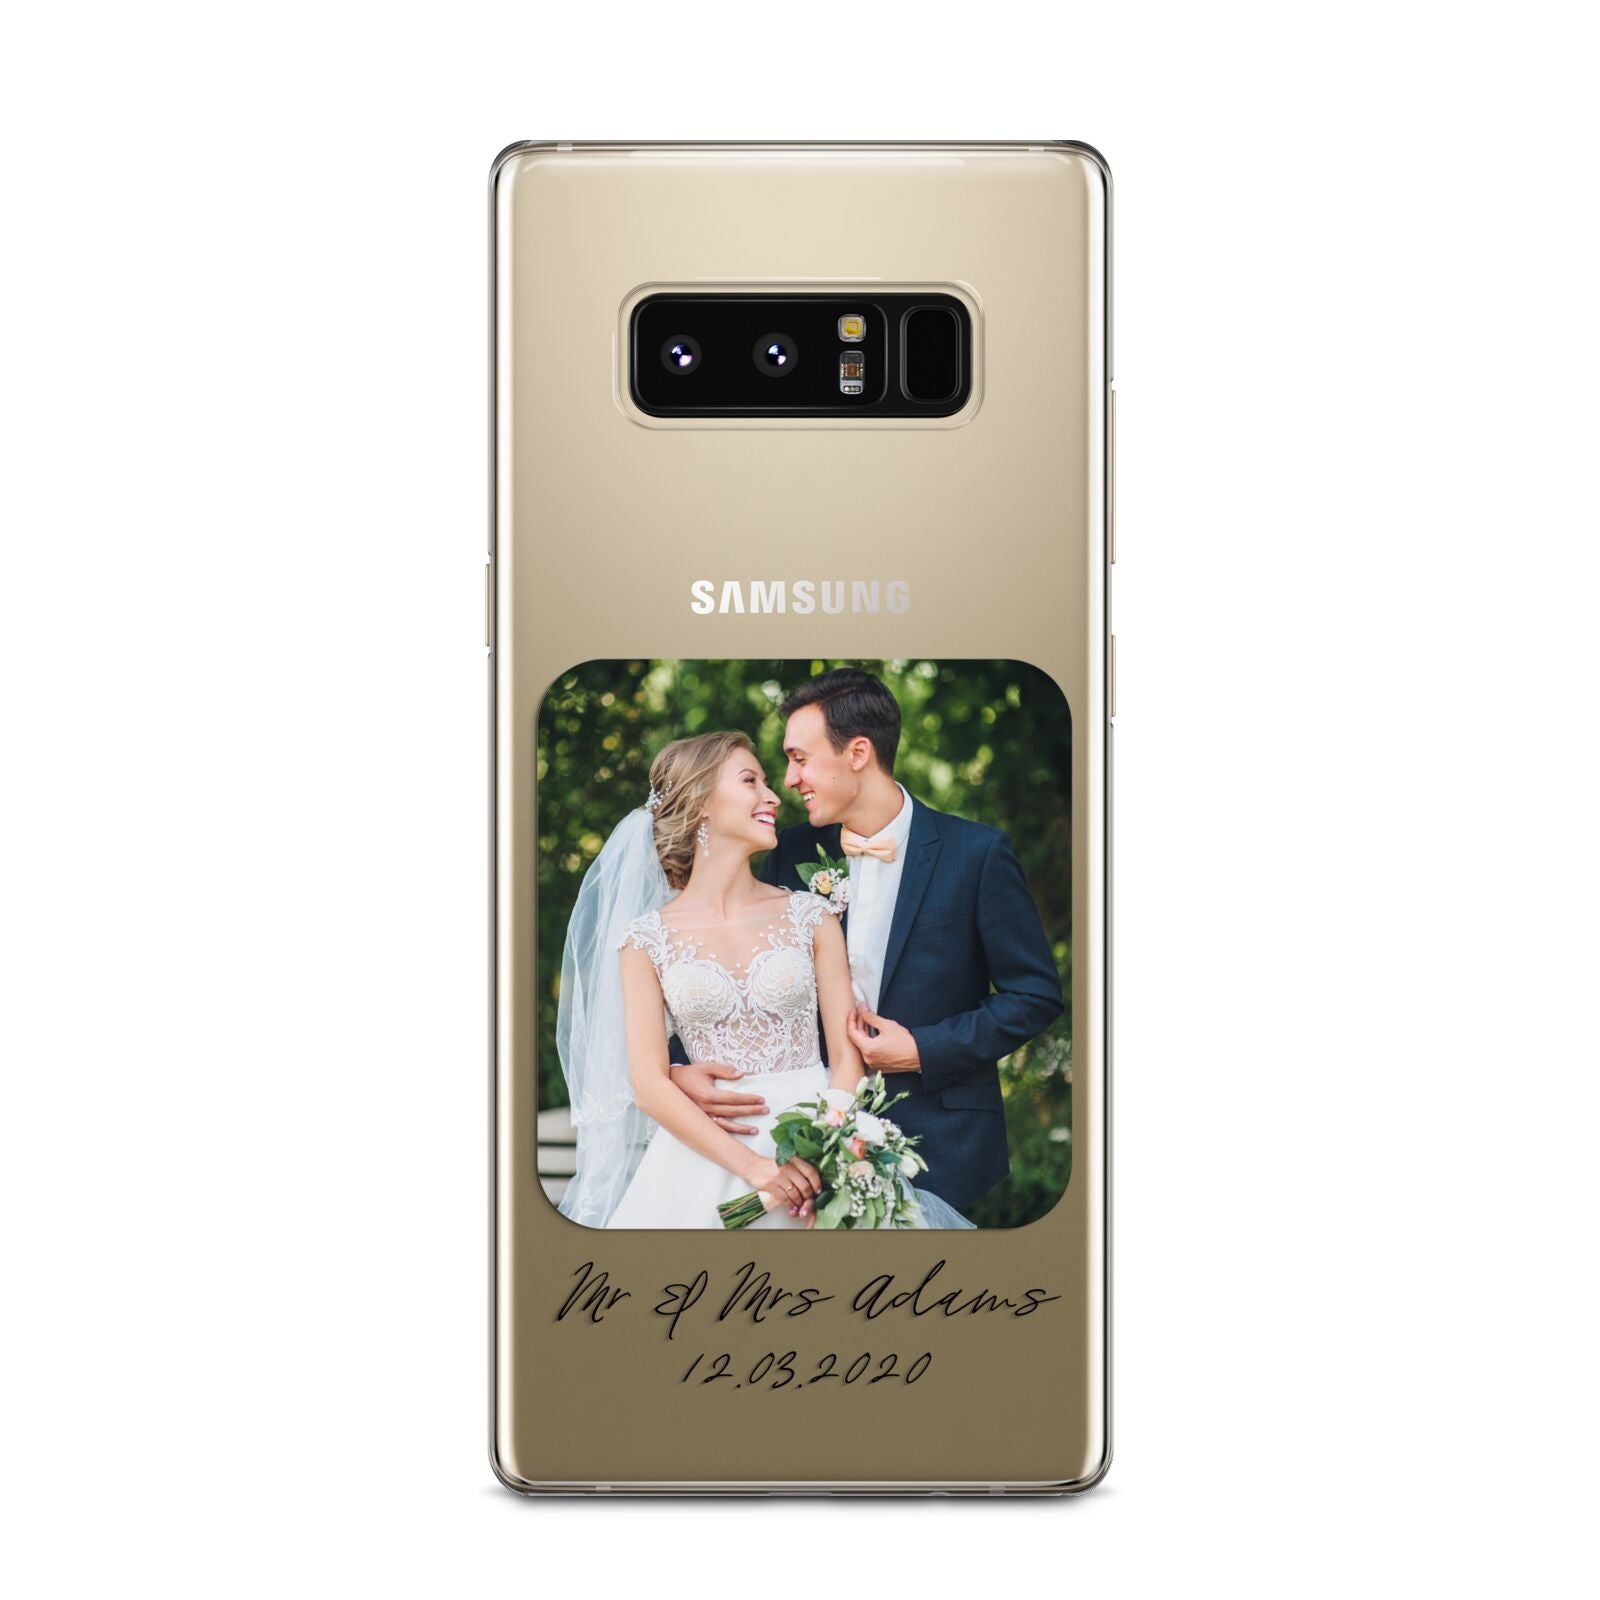 Wedding Photo Upload Keepsake with Text Samsung Galaxy Note 8 Case